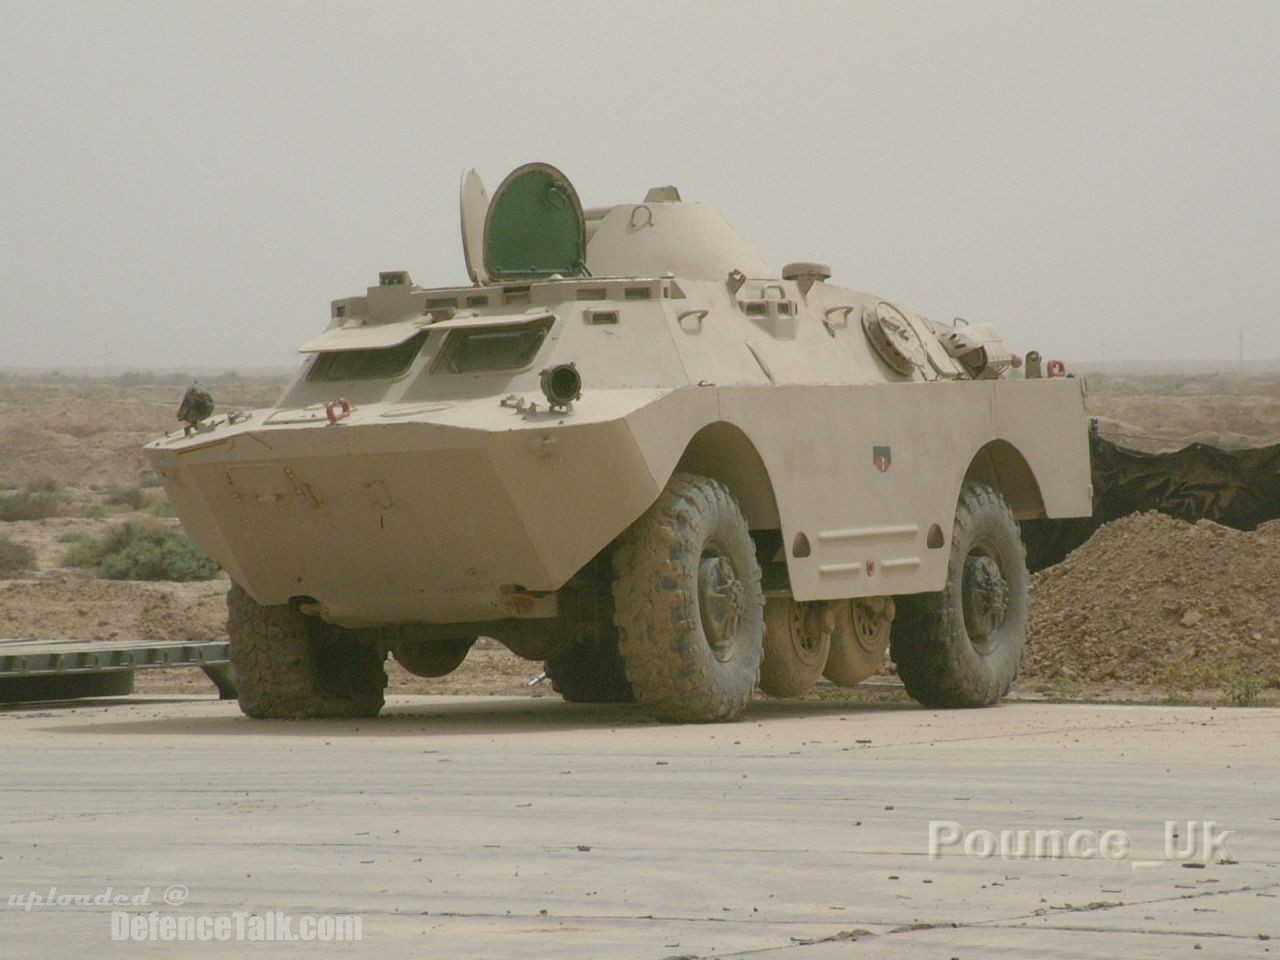 A BRDM 2 in Iraq